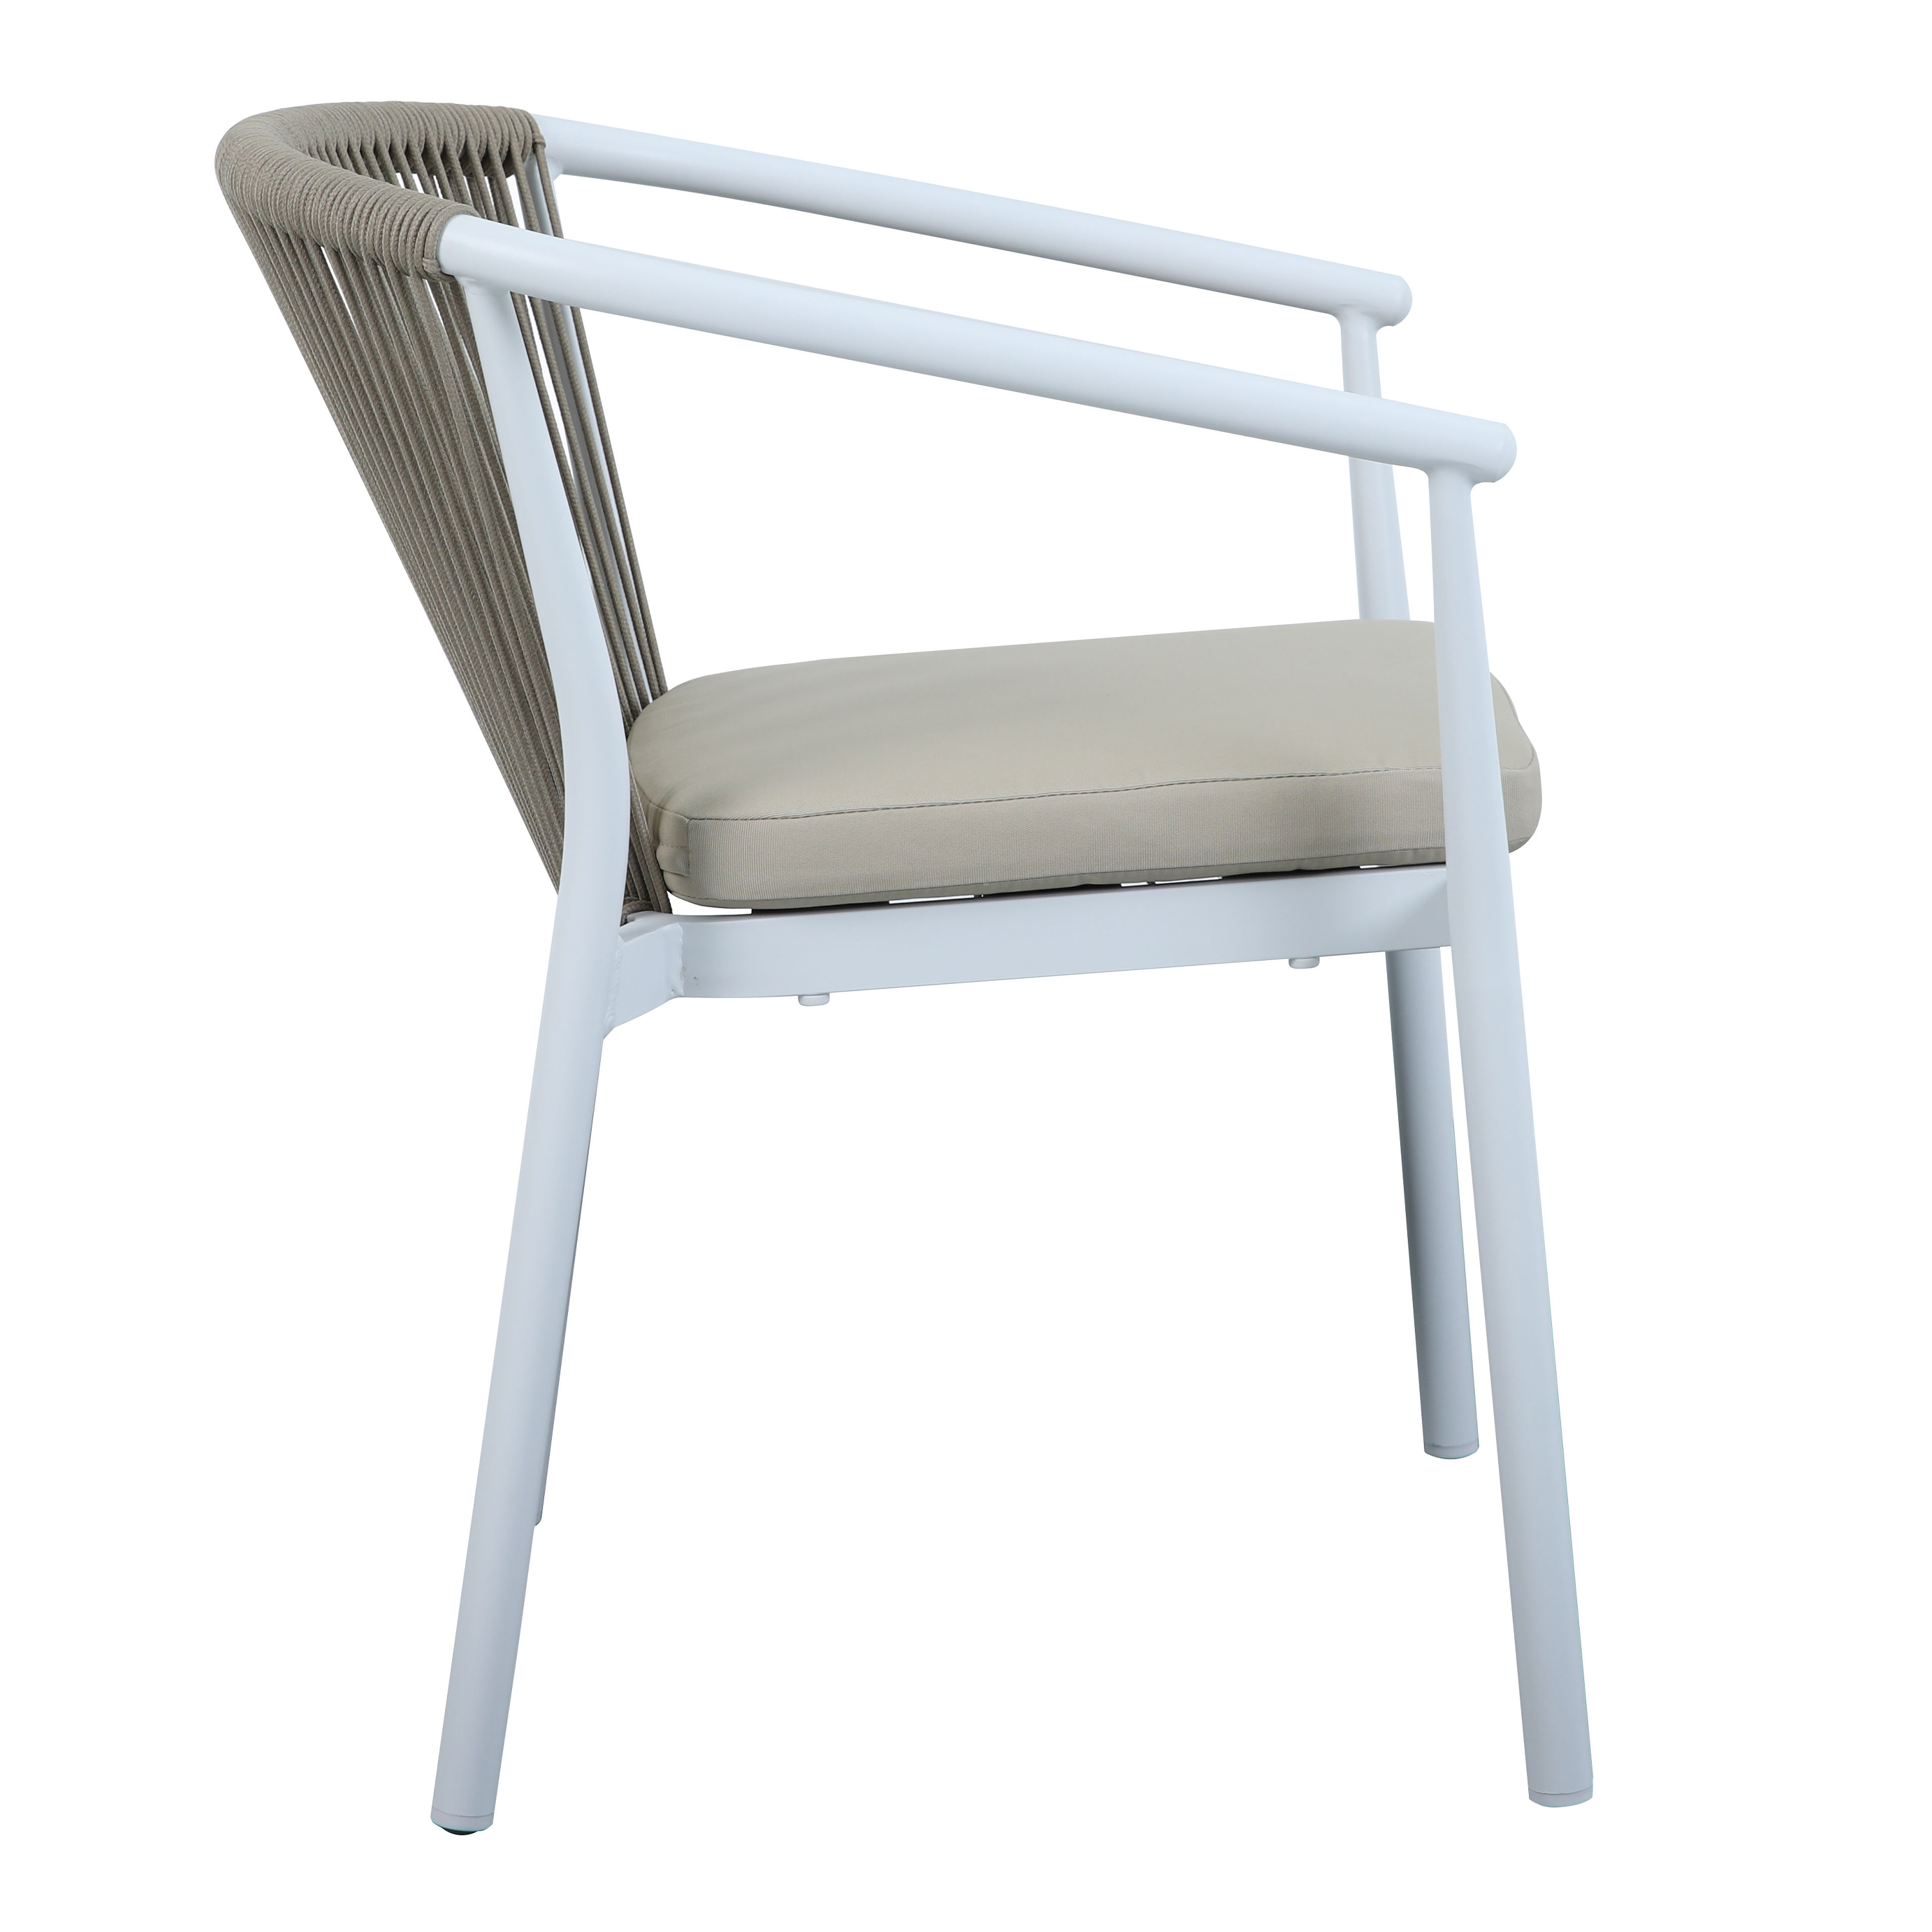 AXI Suvi Tuinset met 4 stoelen Wit met Teak-look Polywood